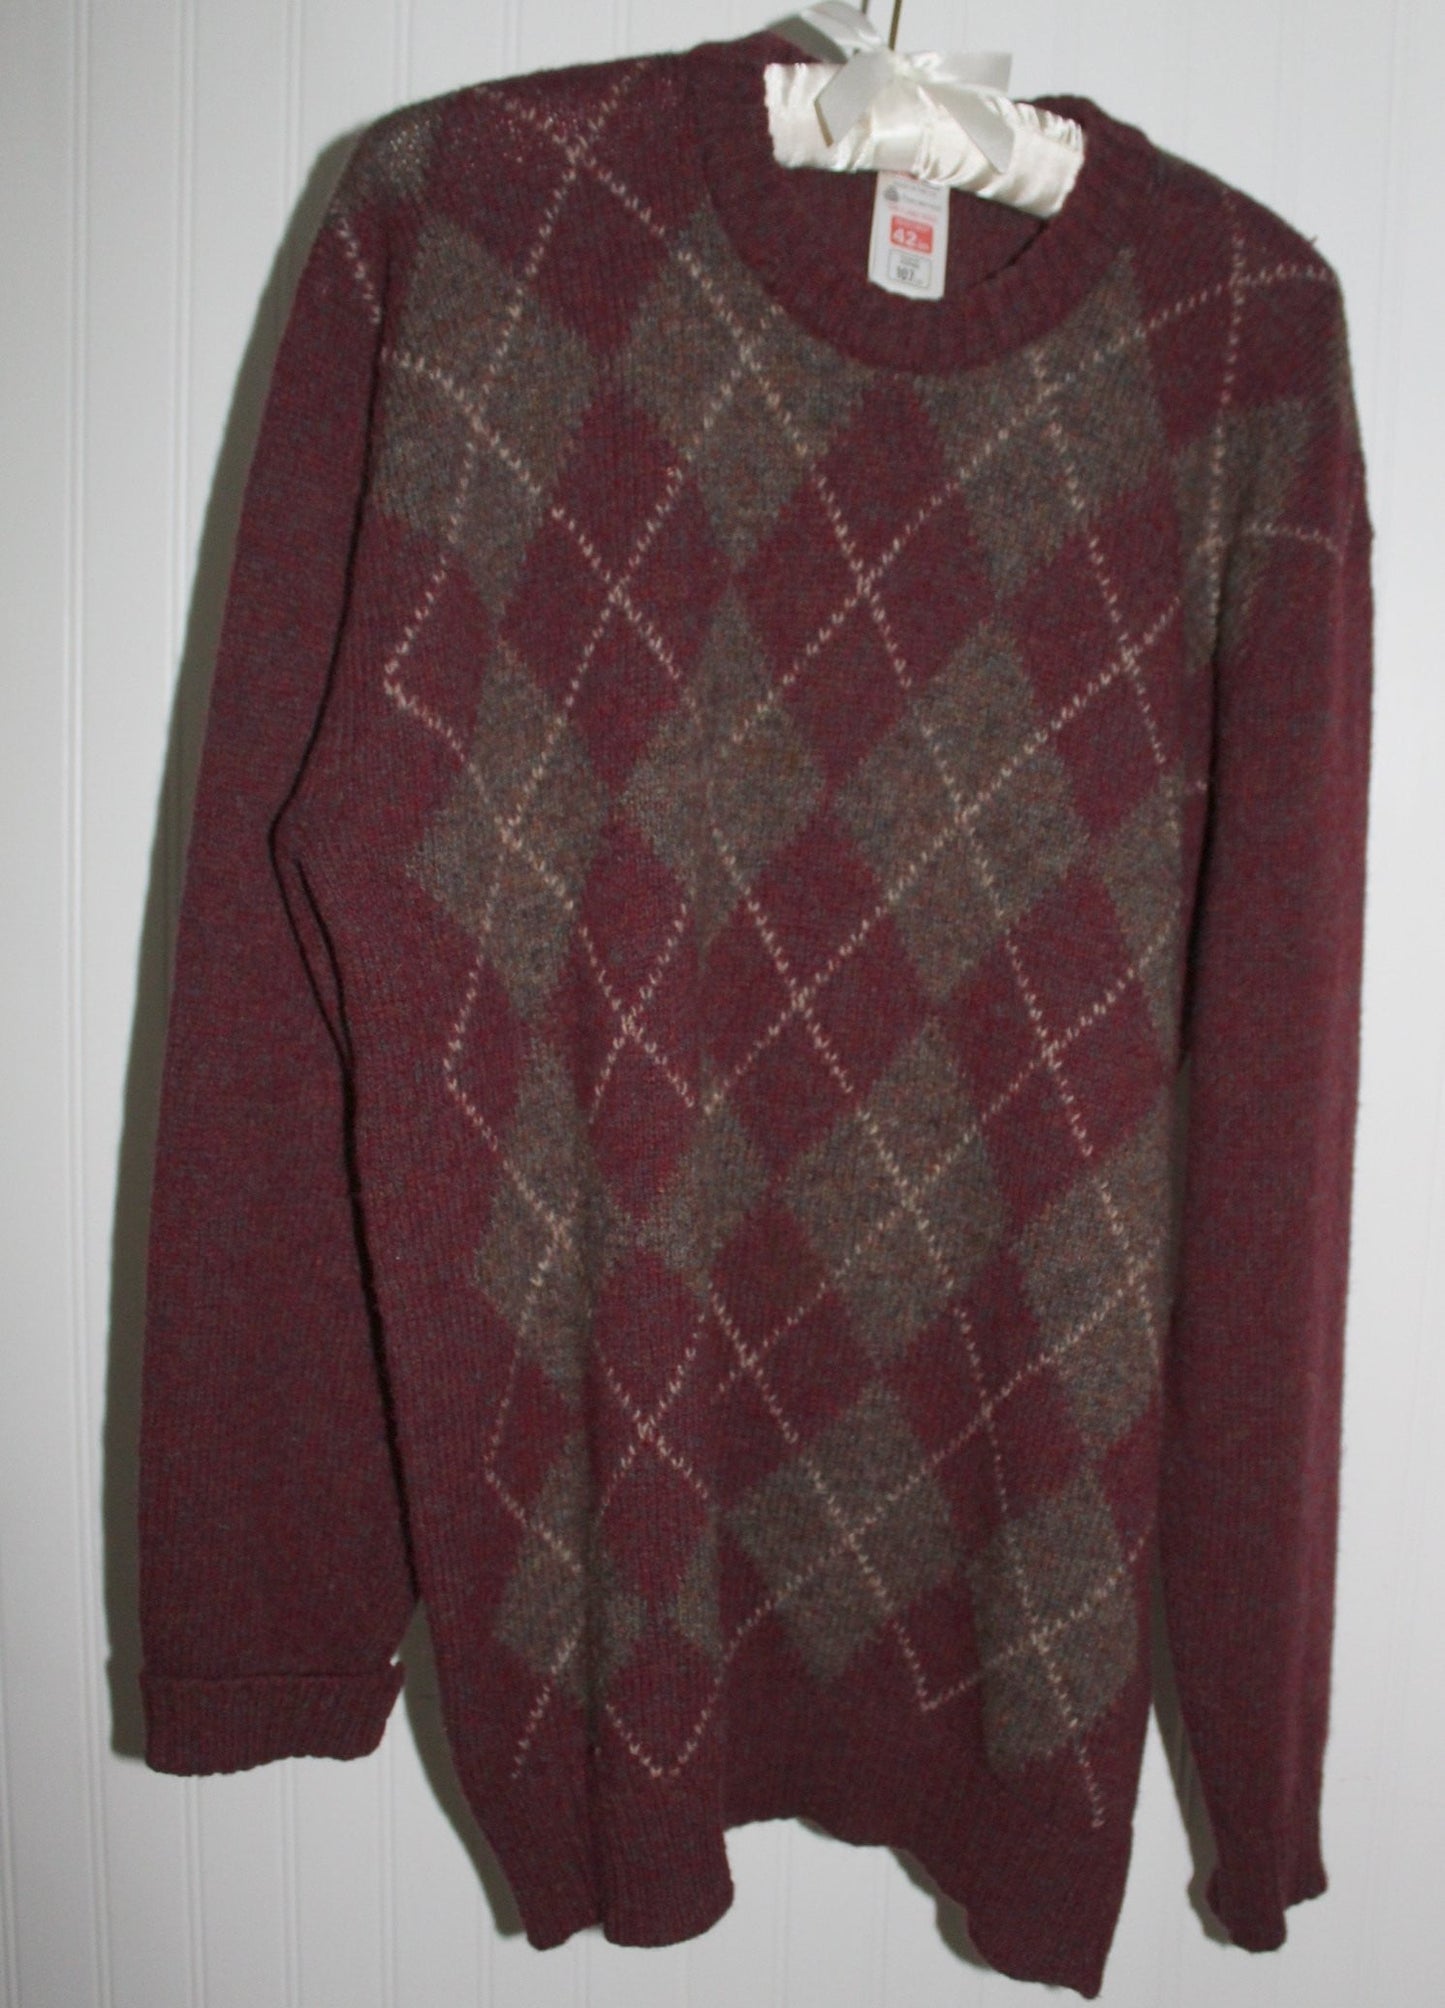 ST MICHAEL UK Sweater Pullover Jumper Maroon Argyle Pattern Size 42 Vintage united kingdom